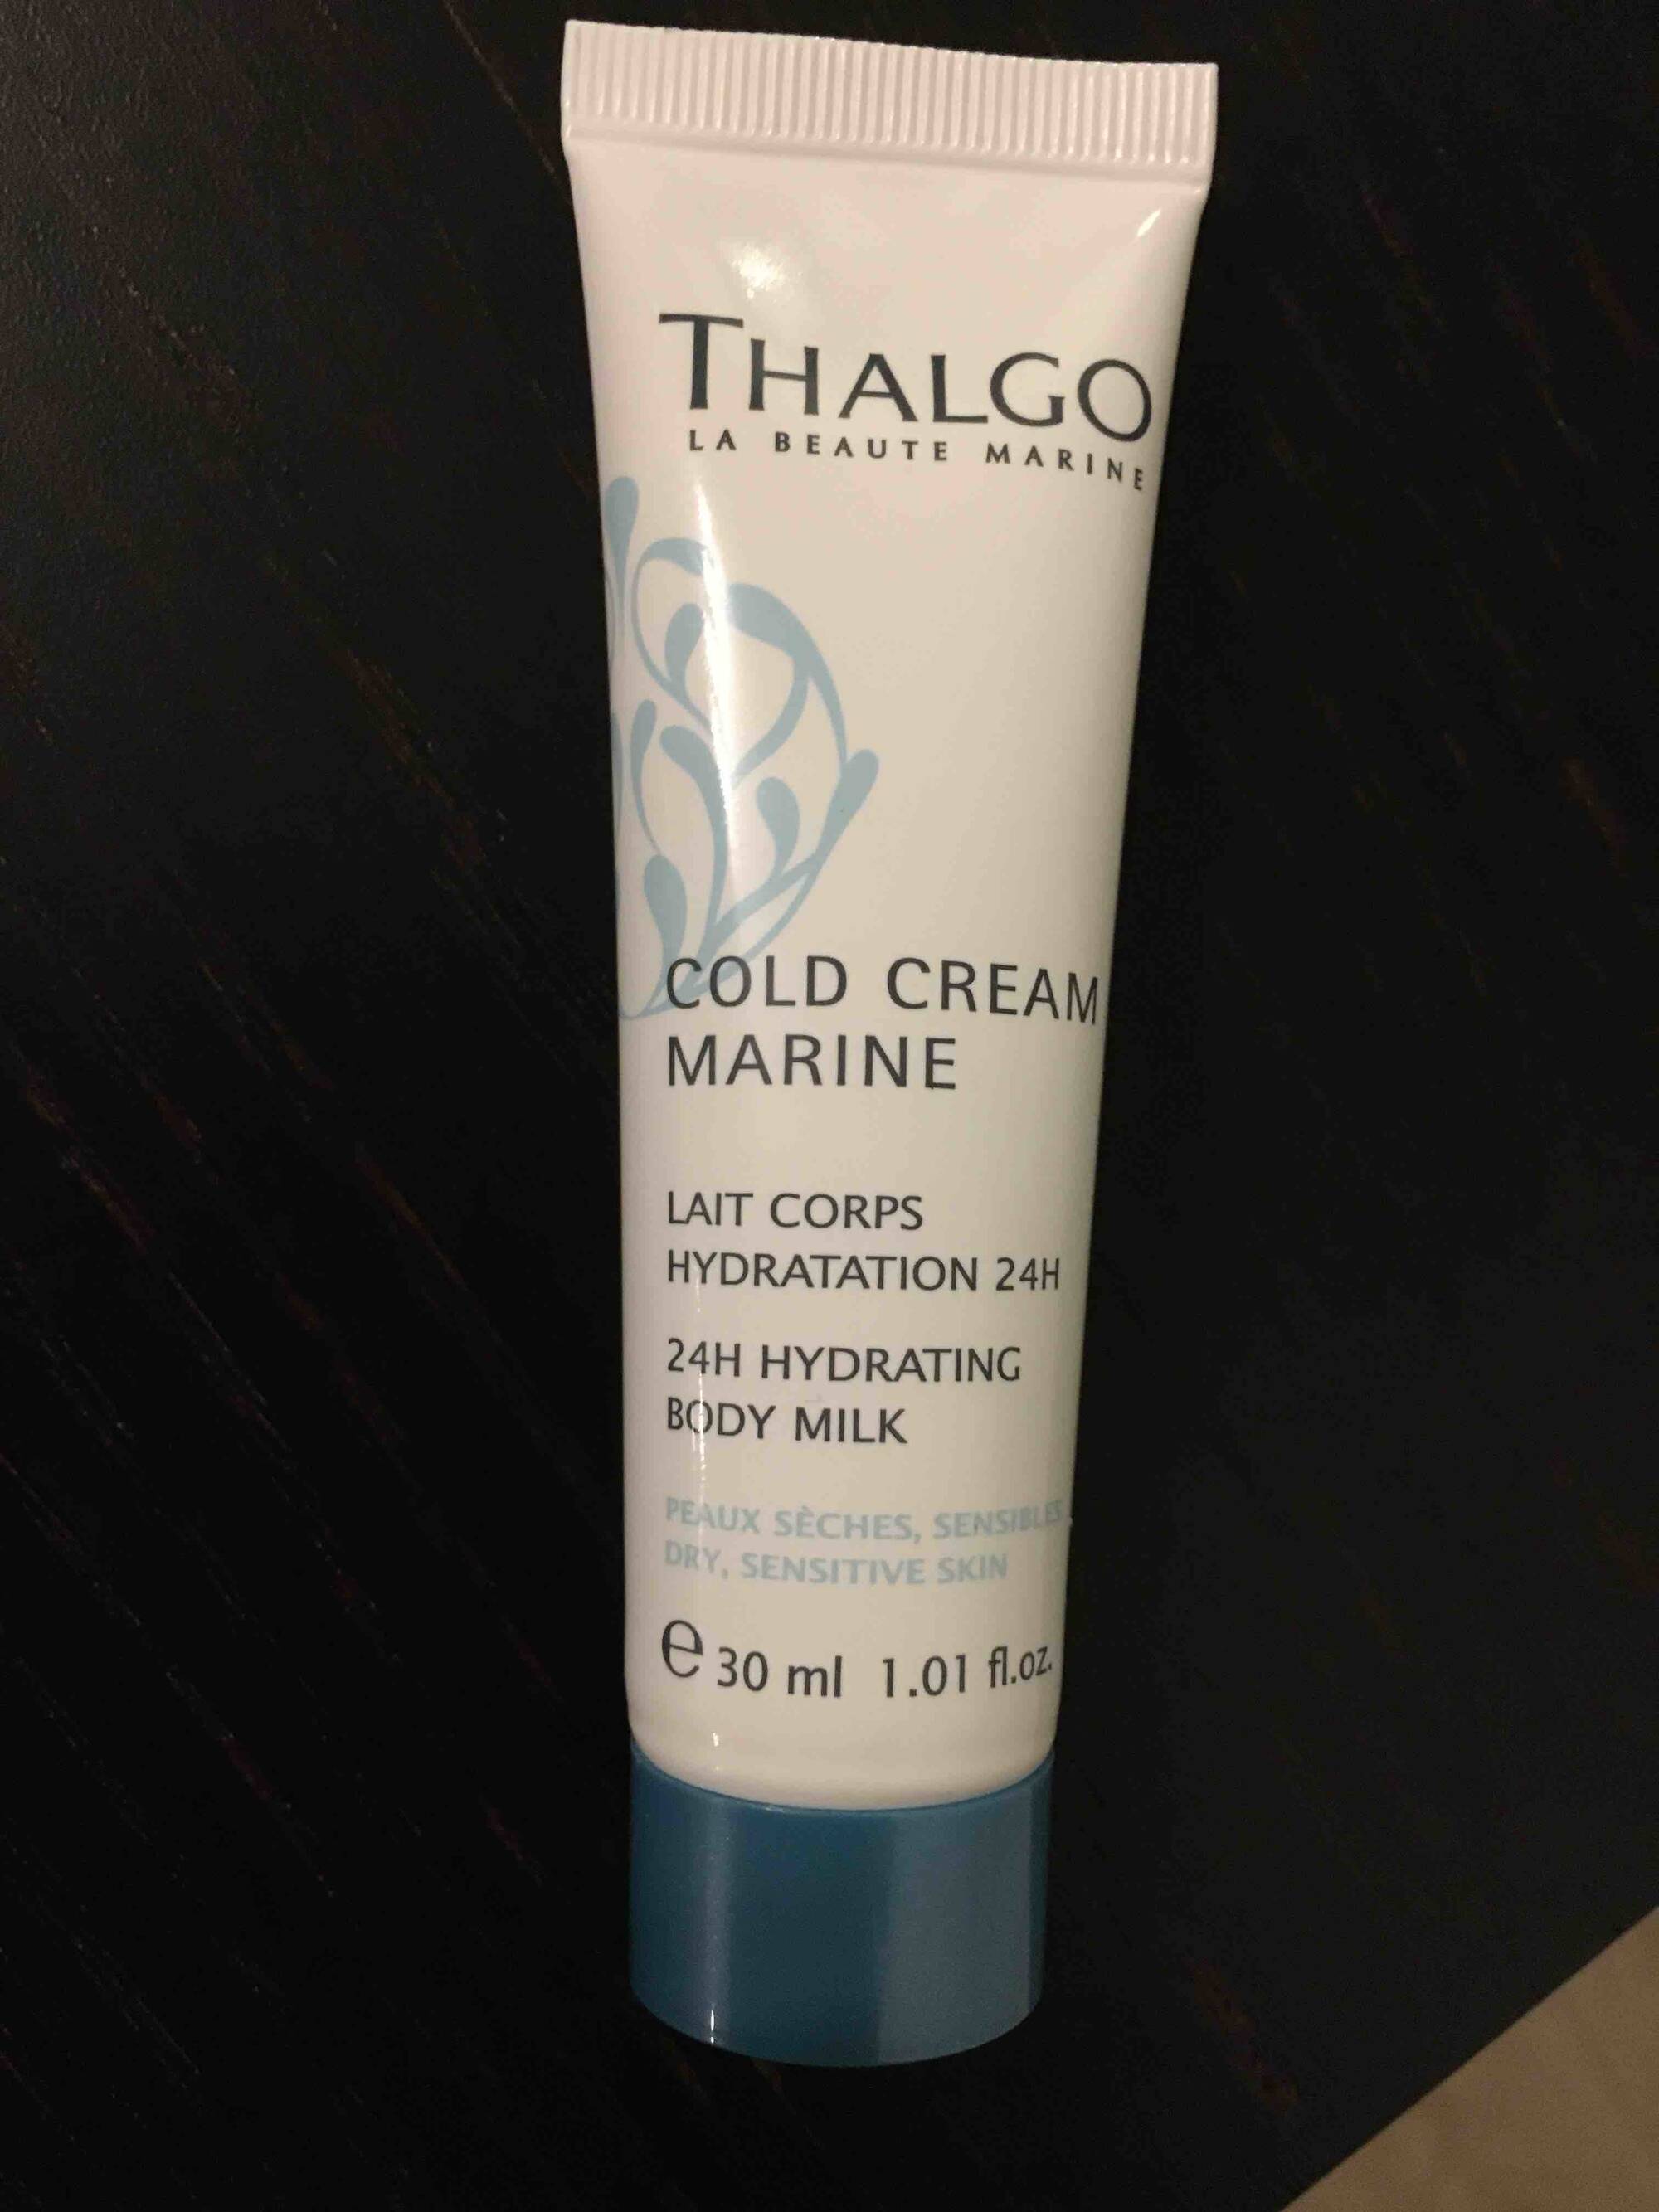 THALGO - Cold cream marine - Lait corps hydratation 24h